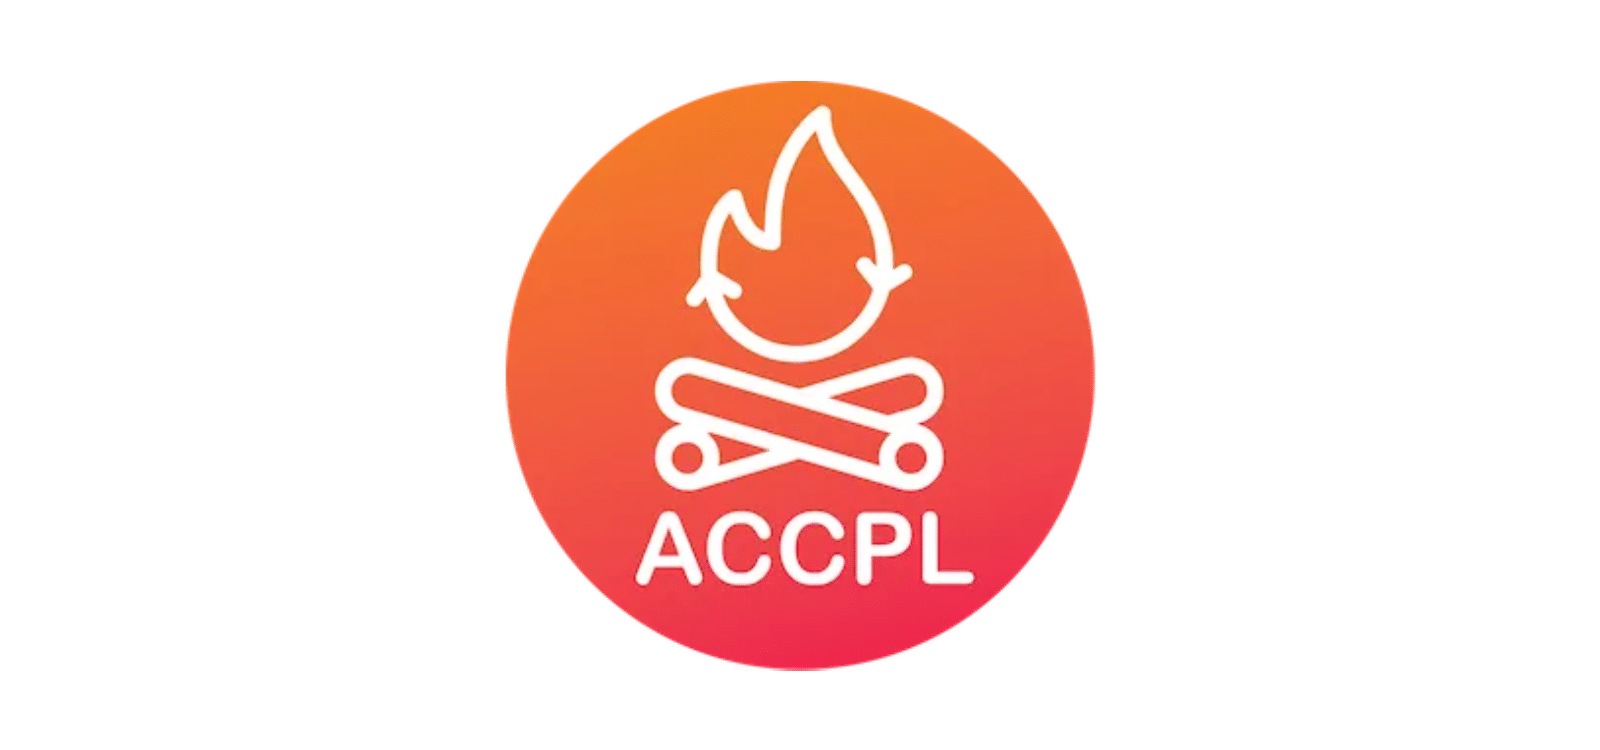 ACCPL logo